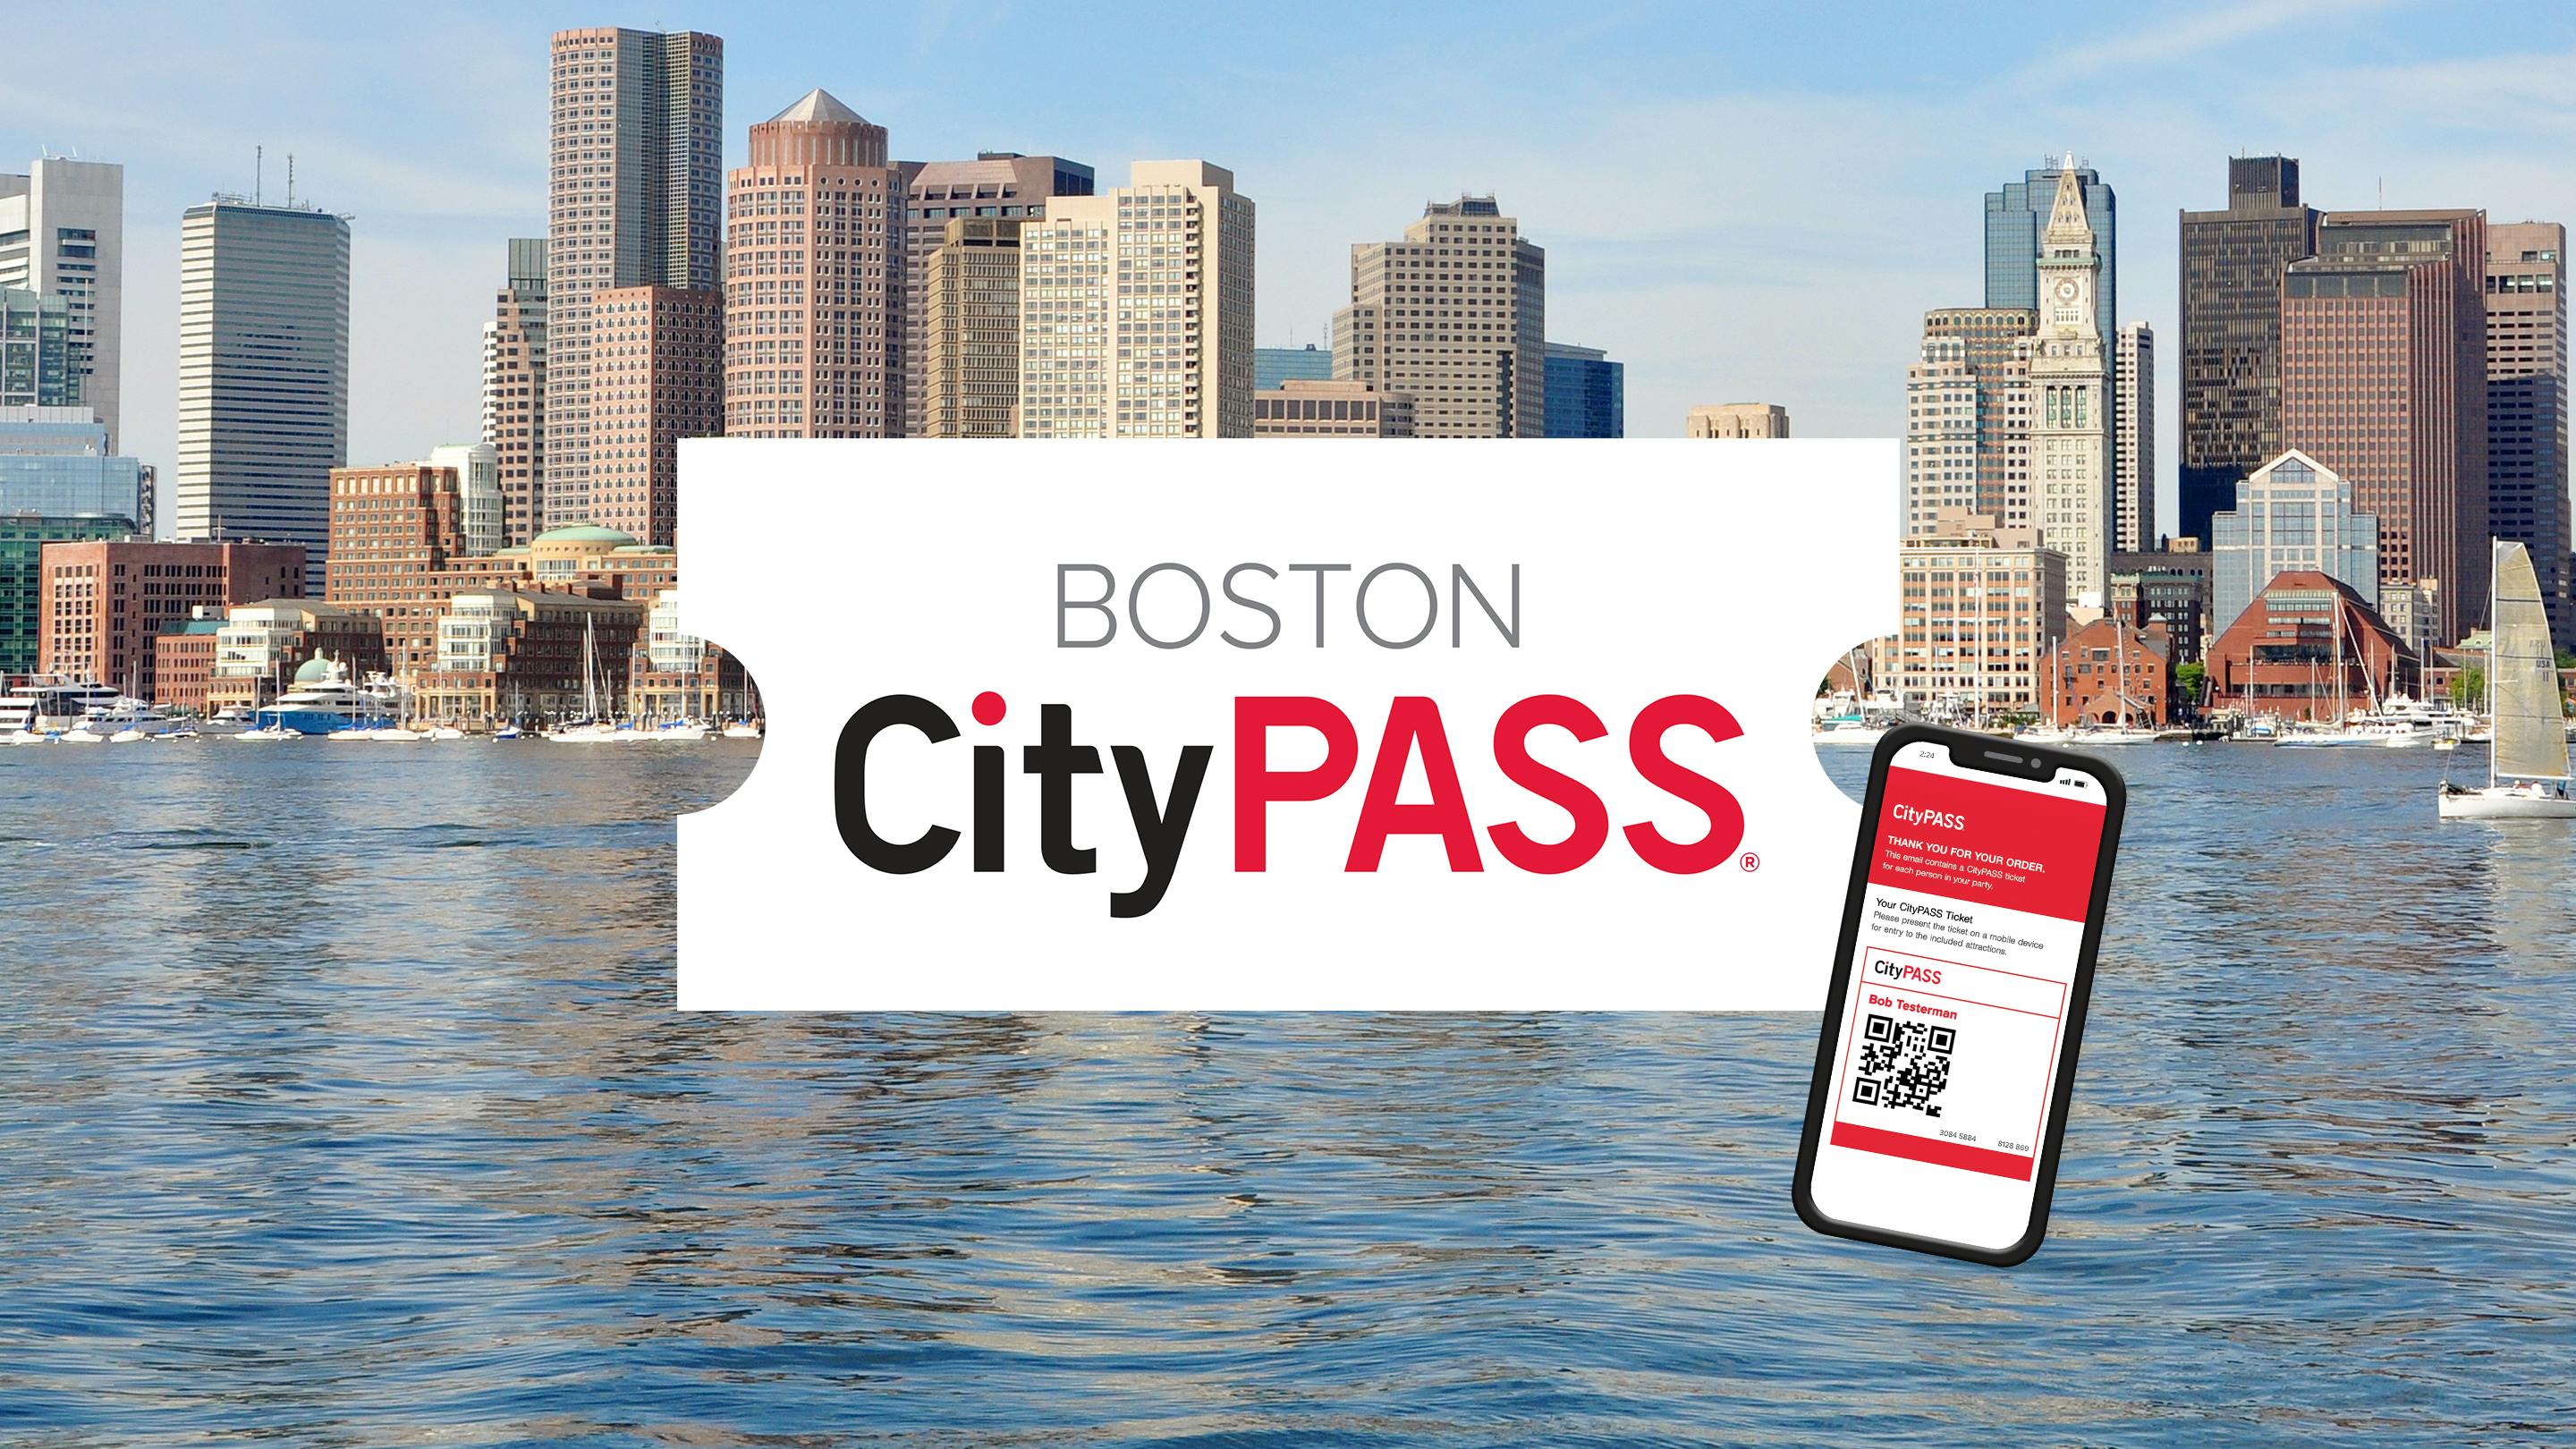 Boston CityPASS mobilbiljett